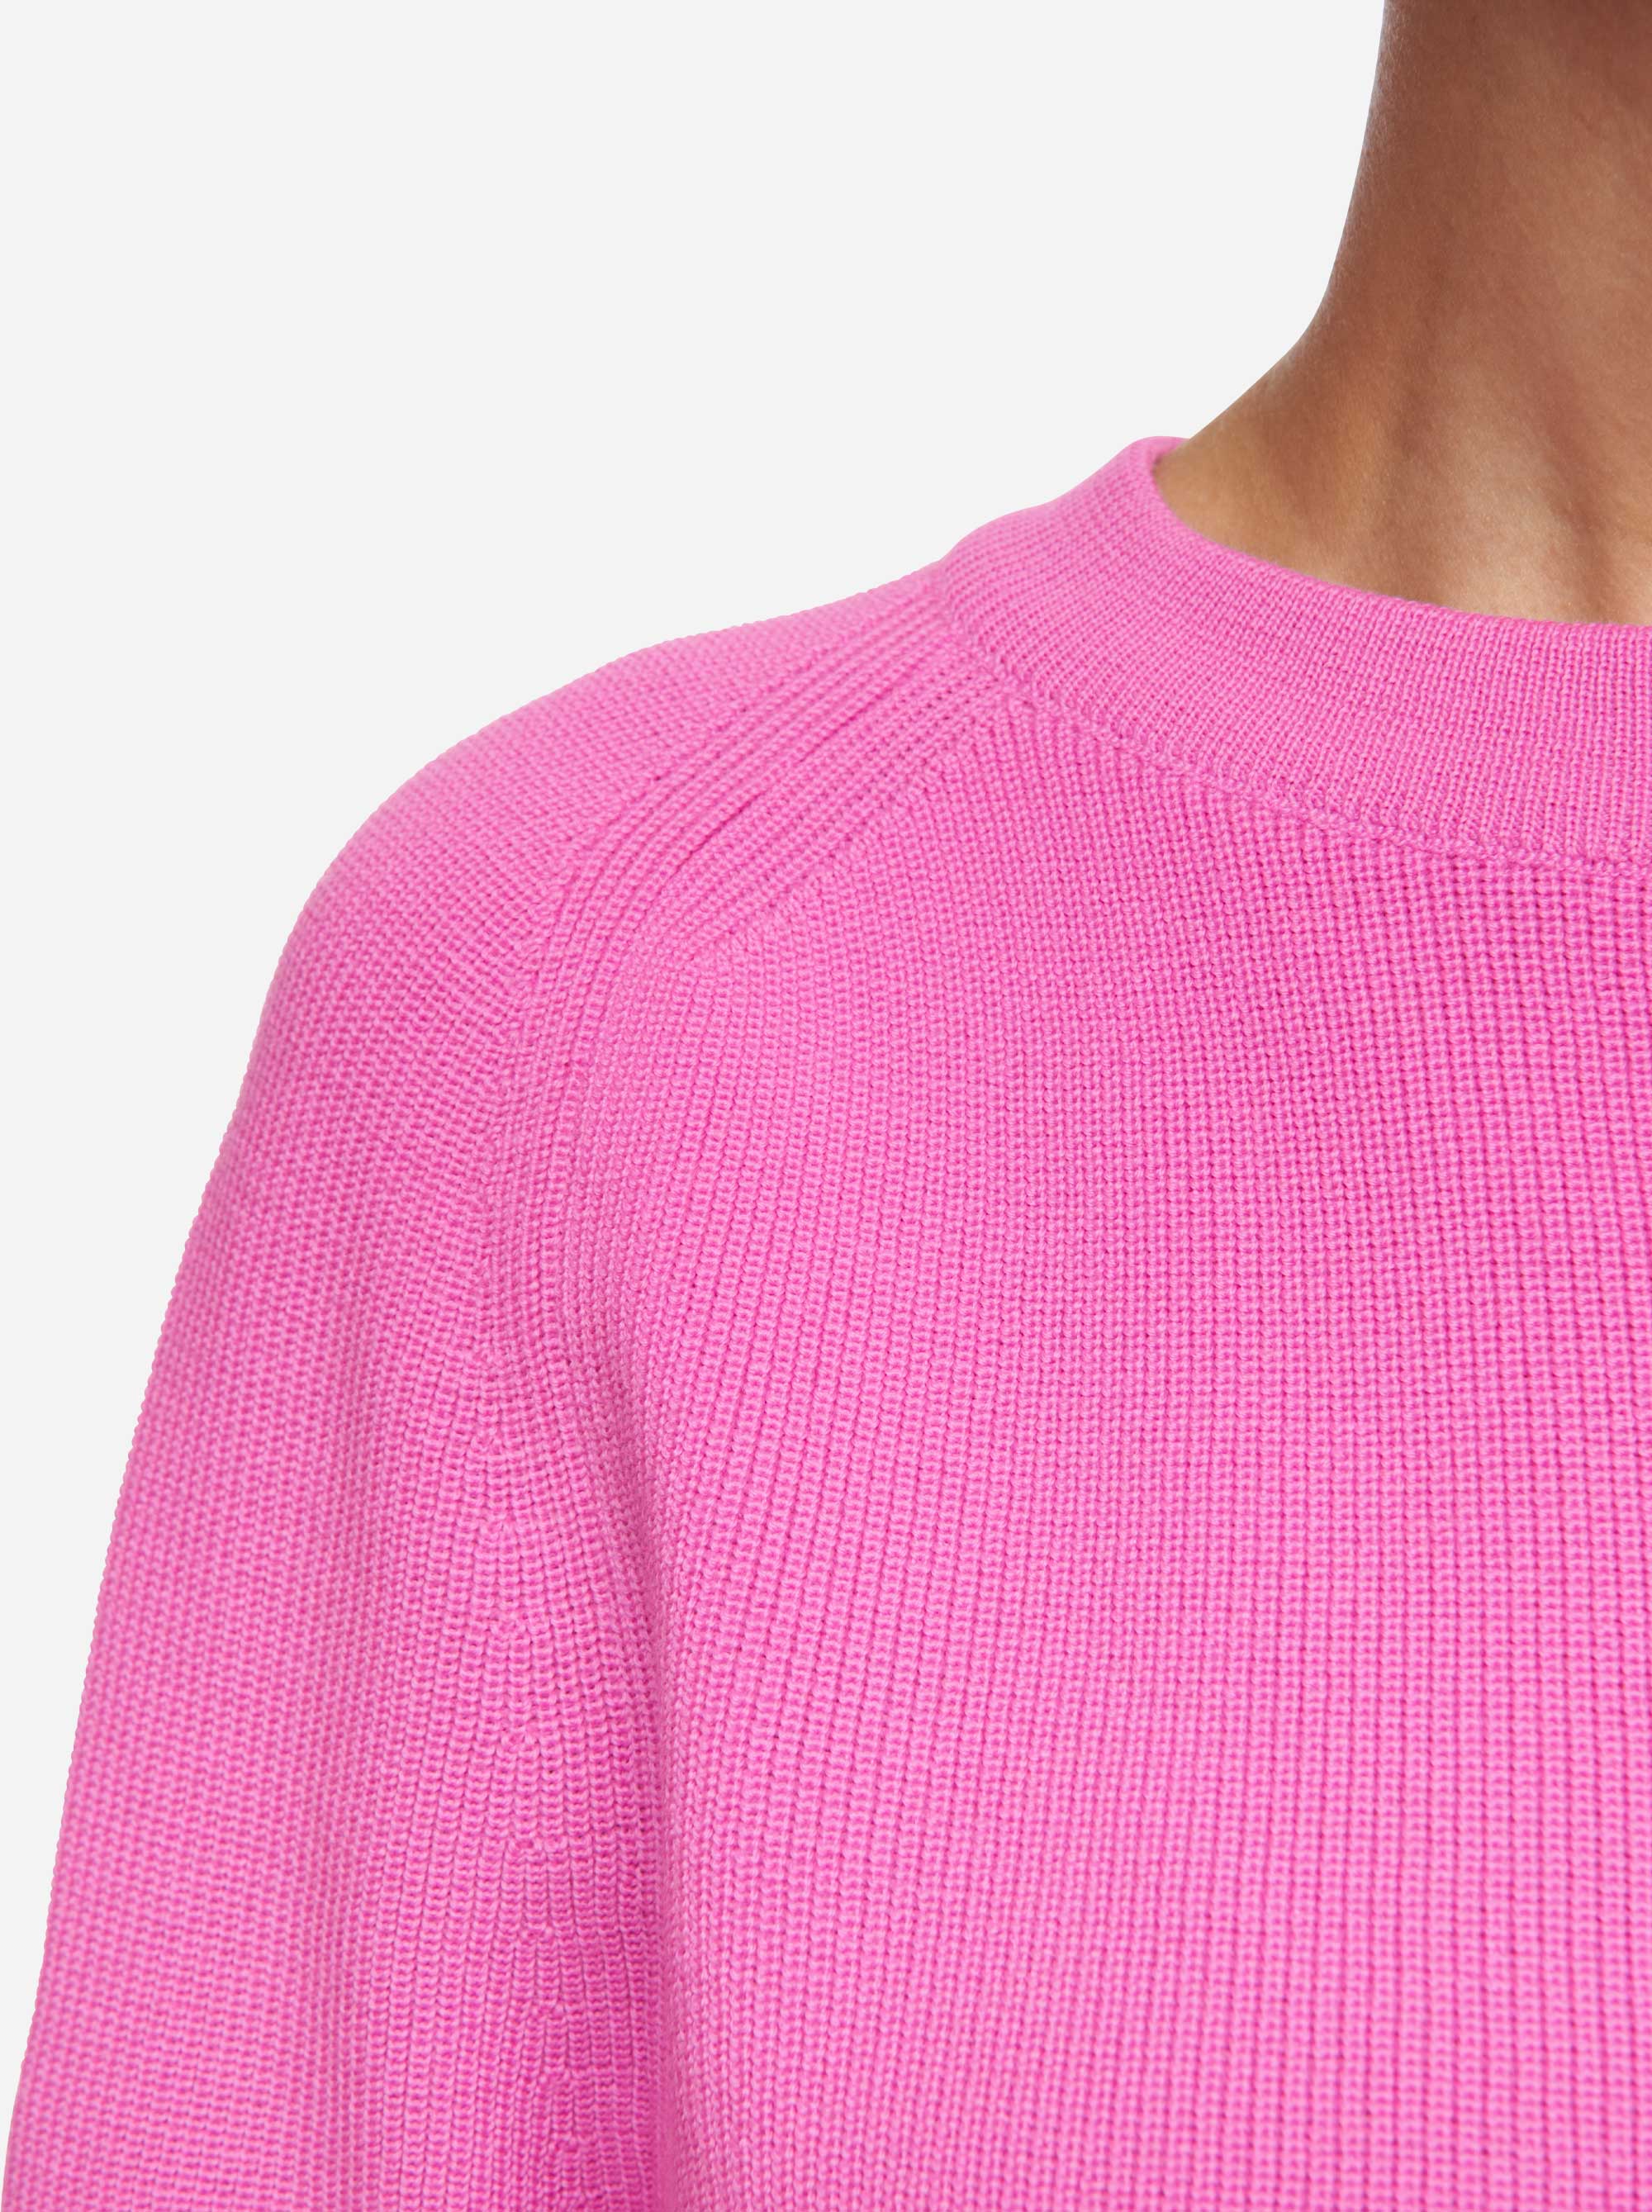 Teym - The Merino Sweater - Crewneck - Women - Bright Pink - 5